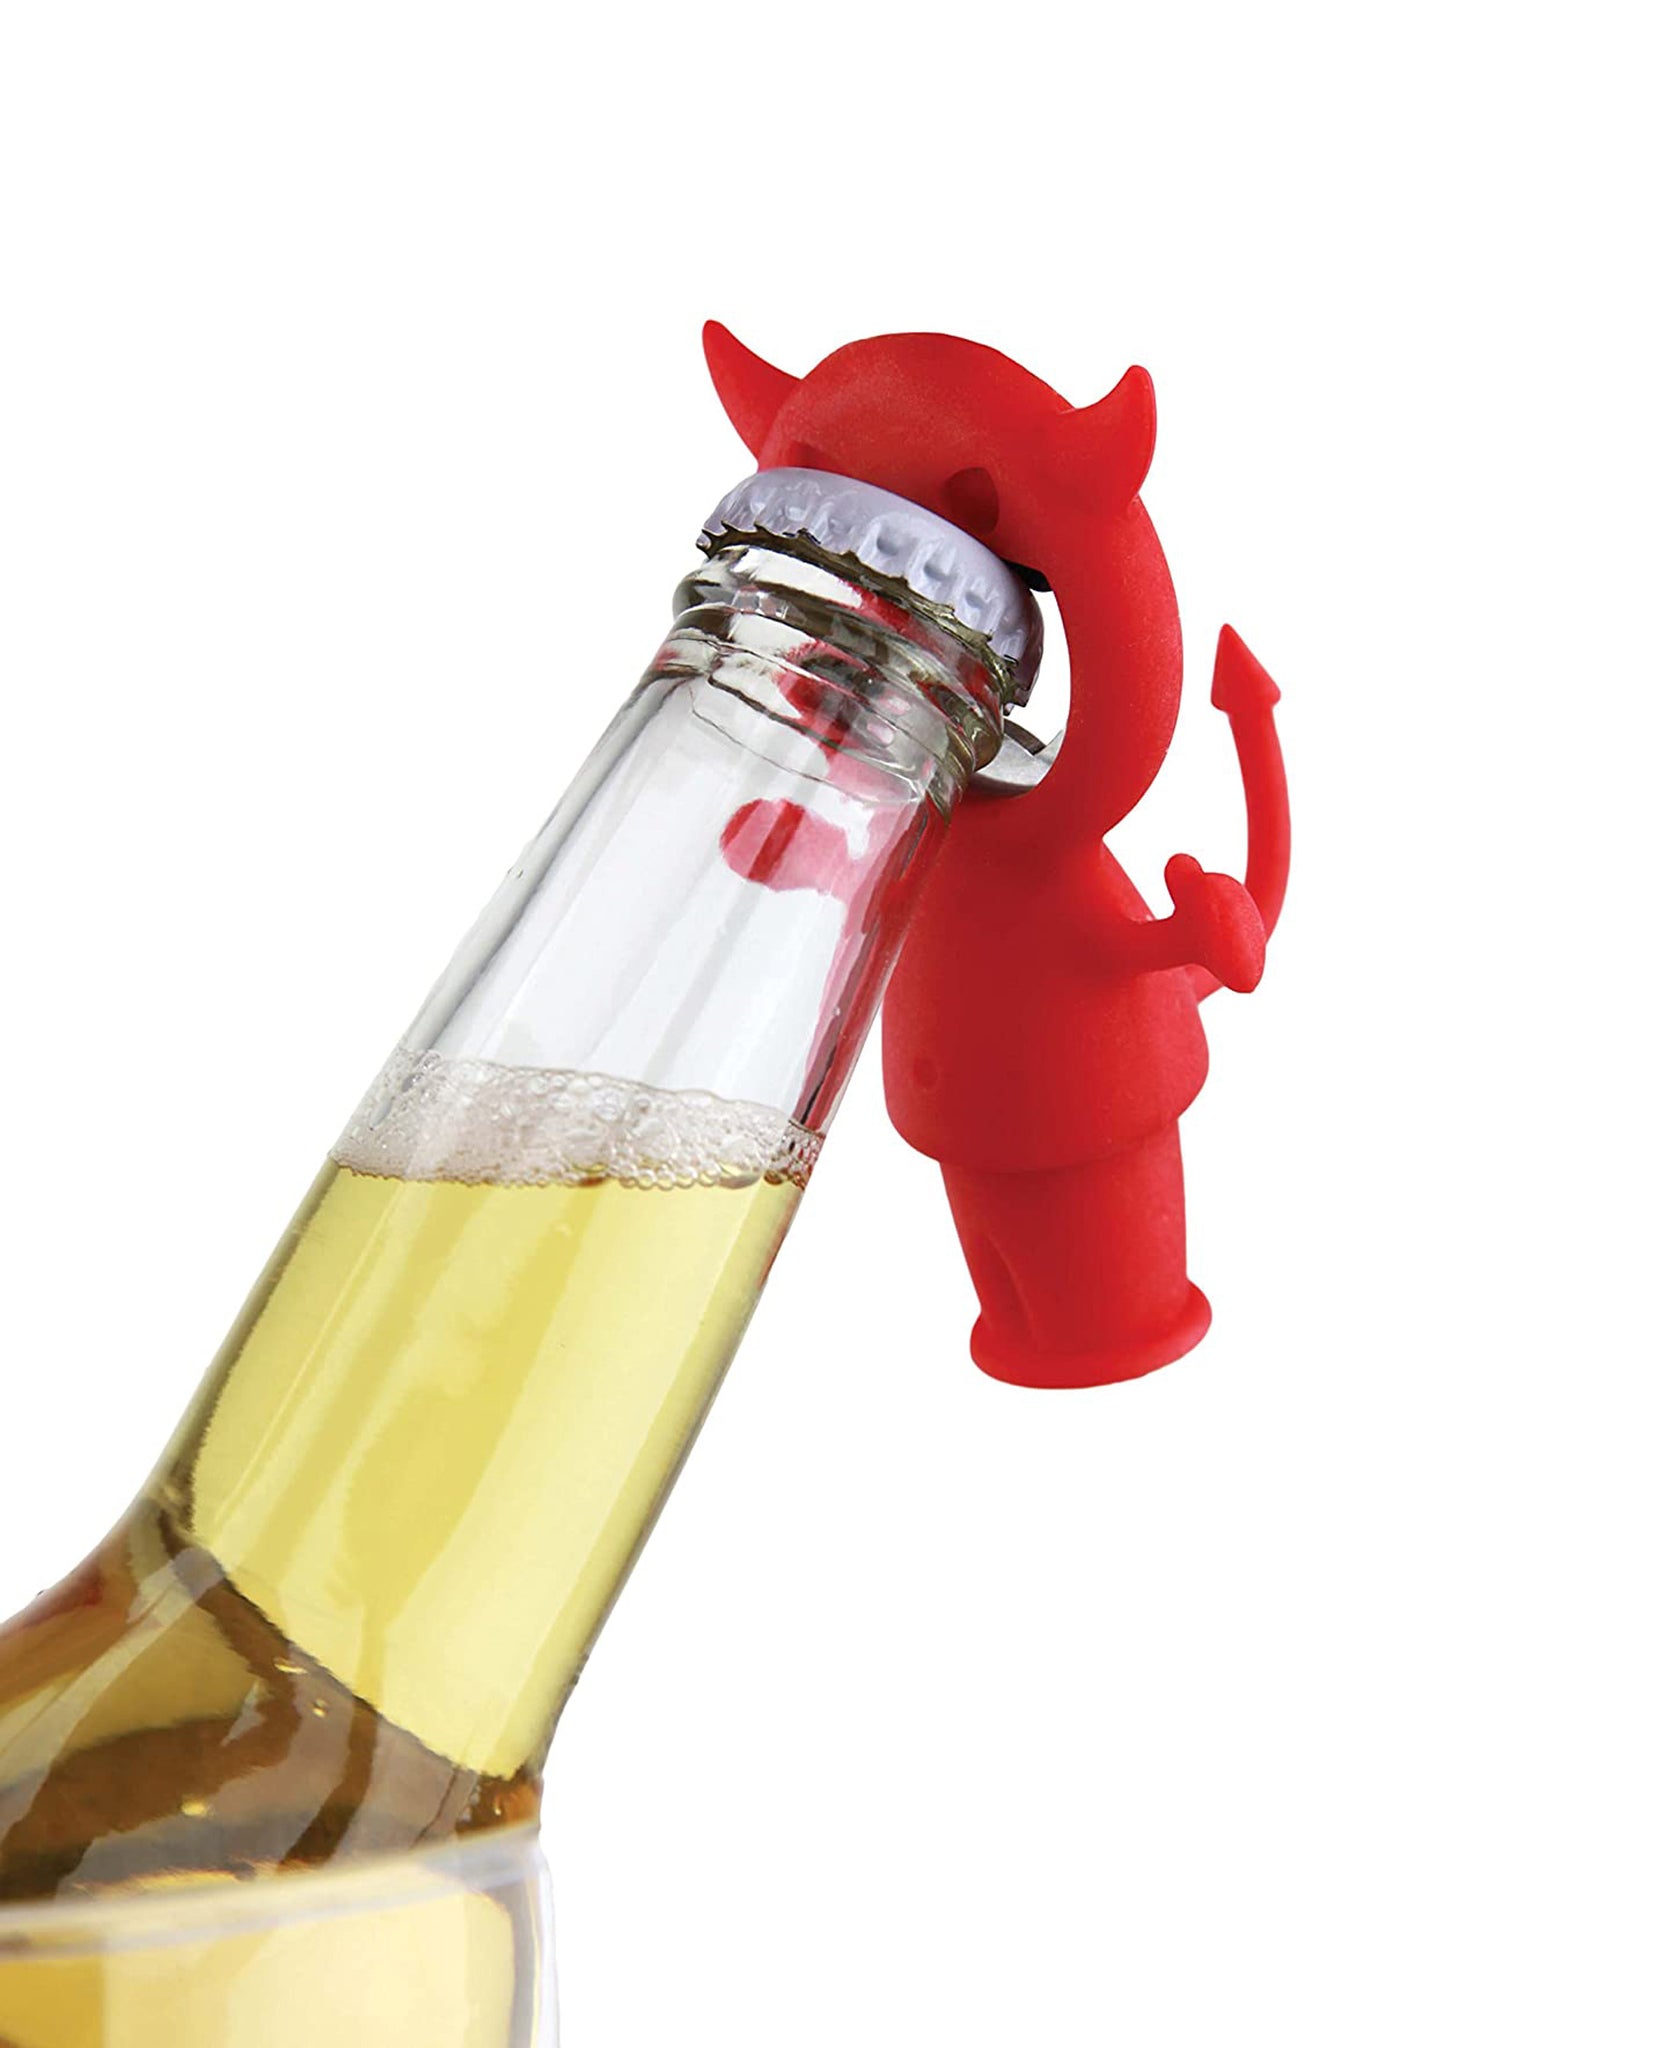 Joie Devil Wine Bottle Opener - Red